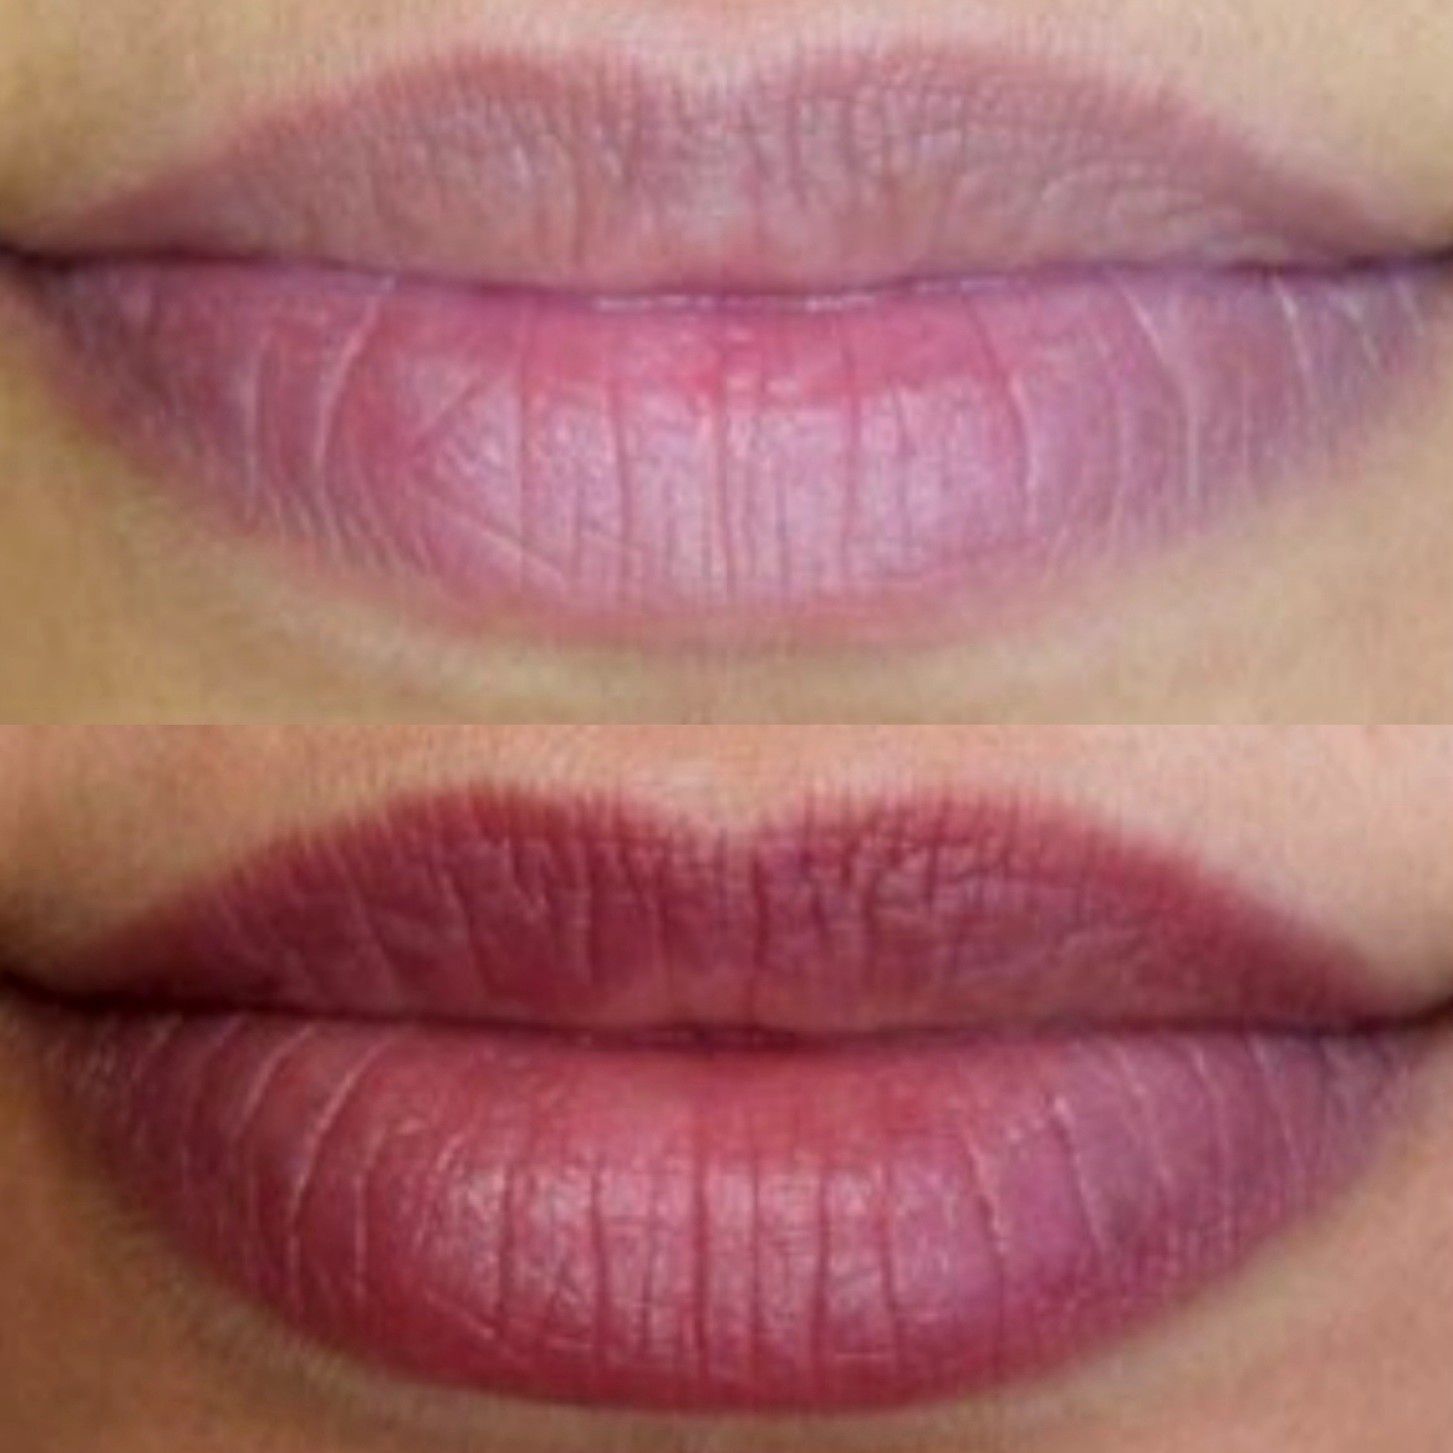 Labios 👄 Lips "Candy Lips" Microblading portfolio